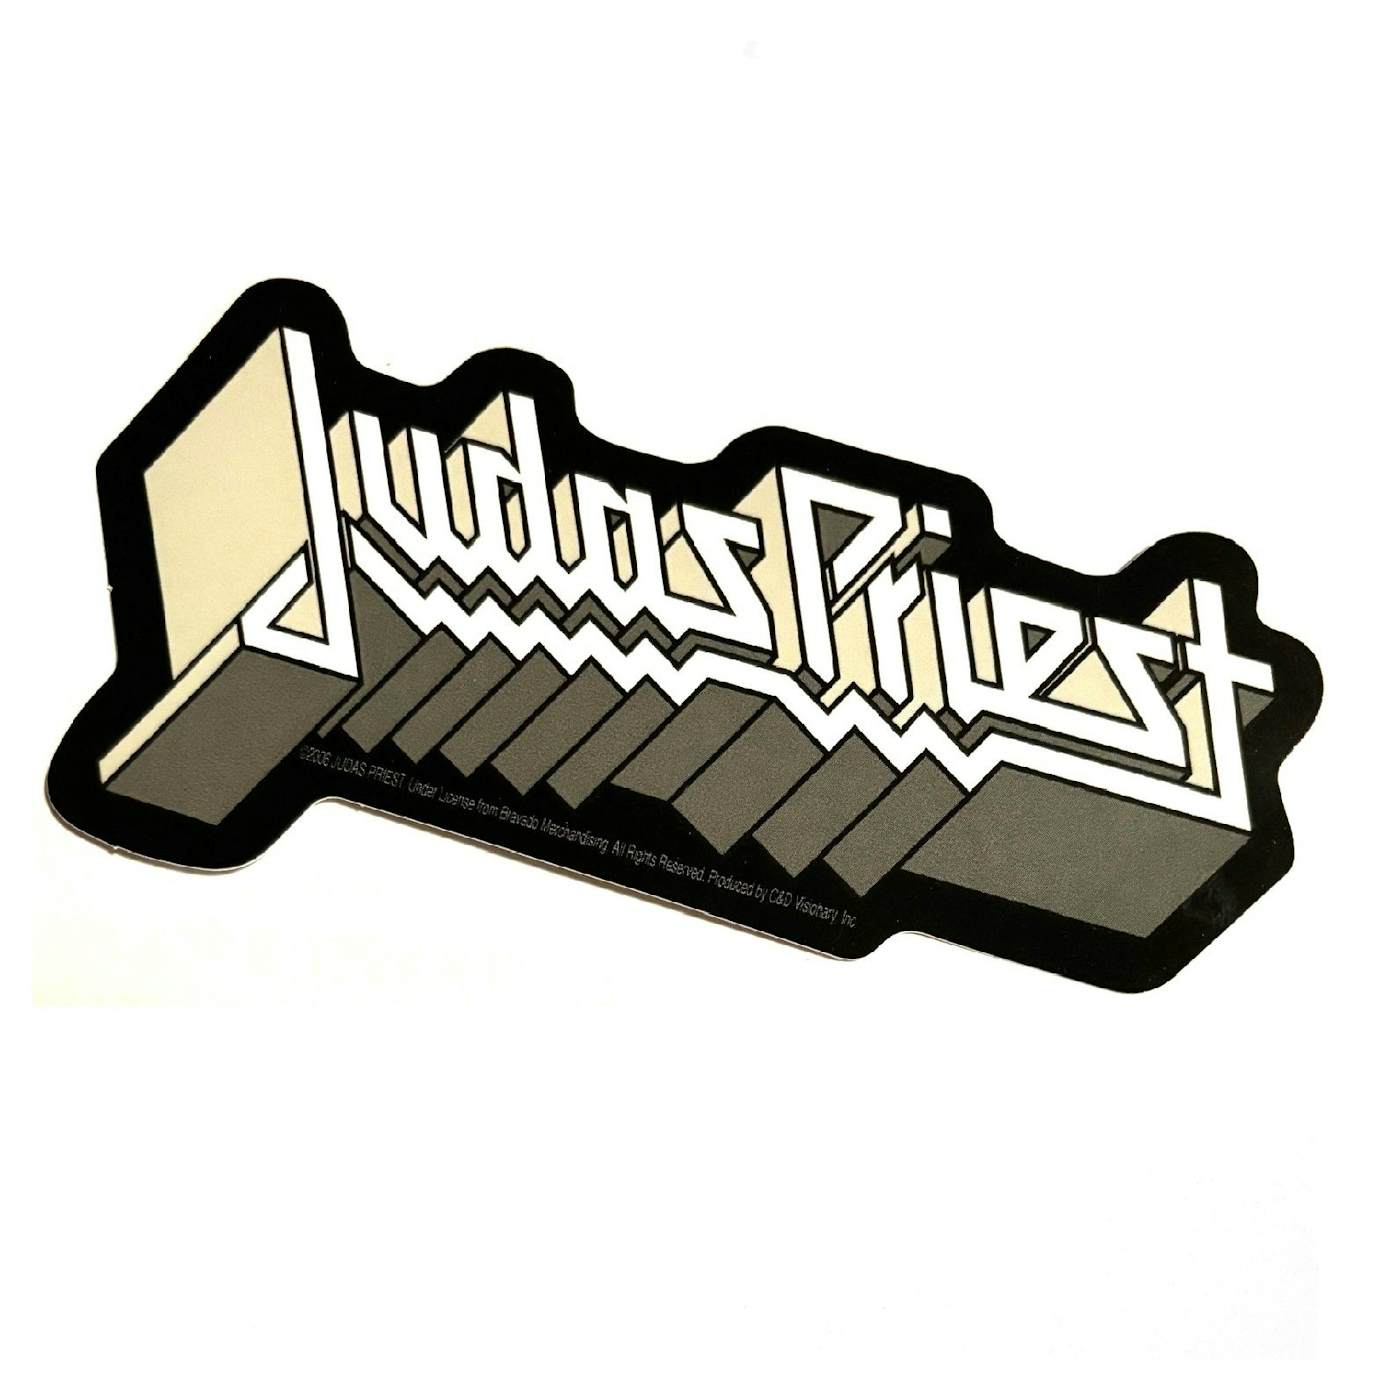 Judas Priest Vinyl Records, CDs, Shirts, and More!